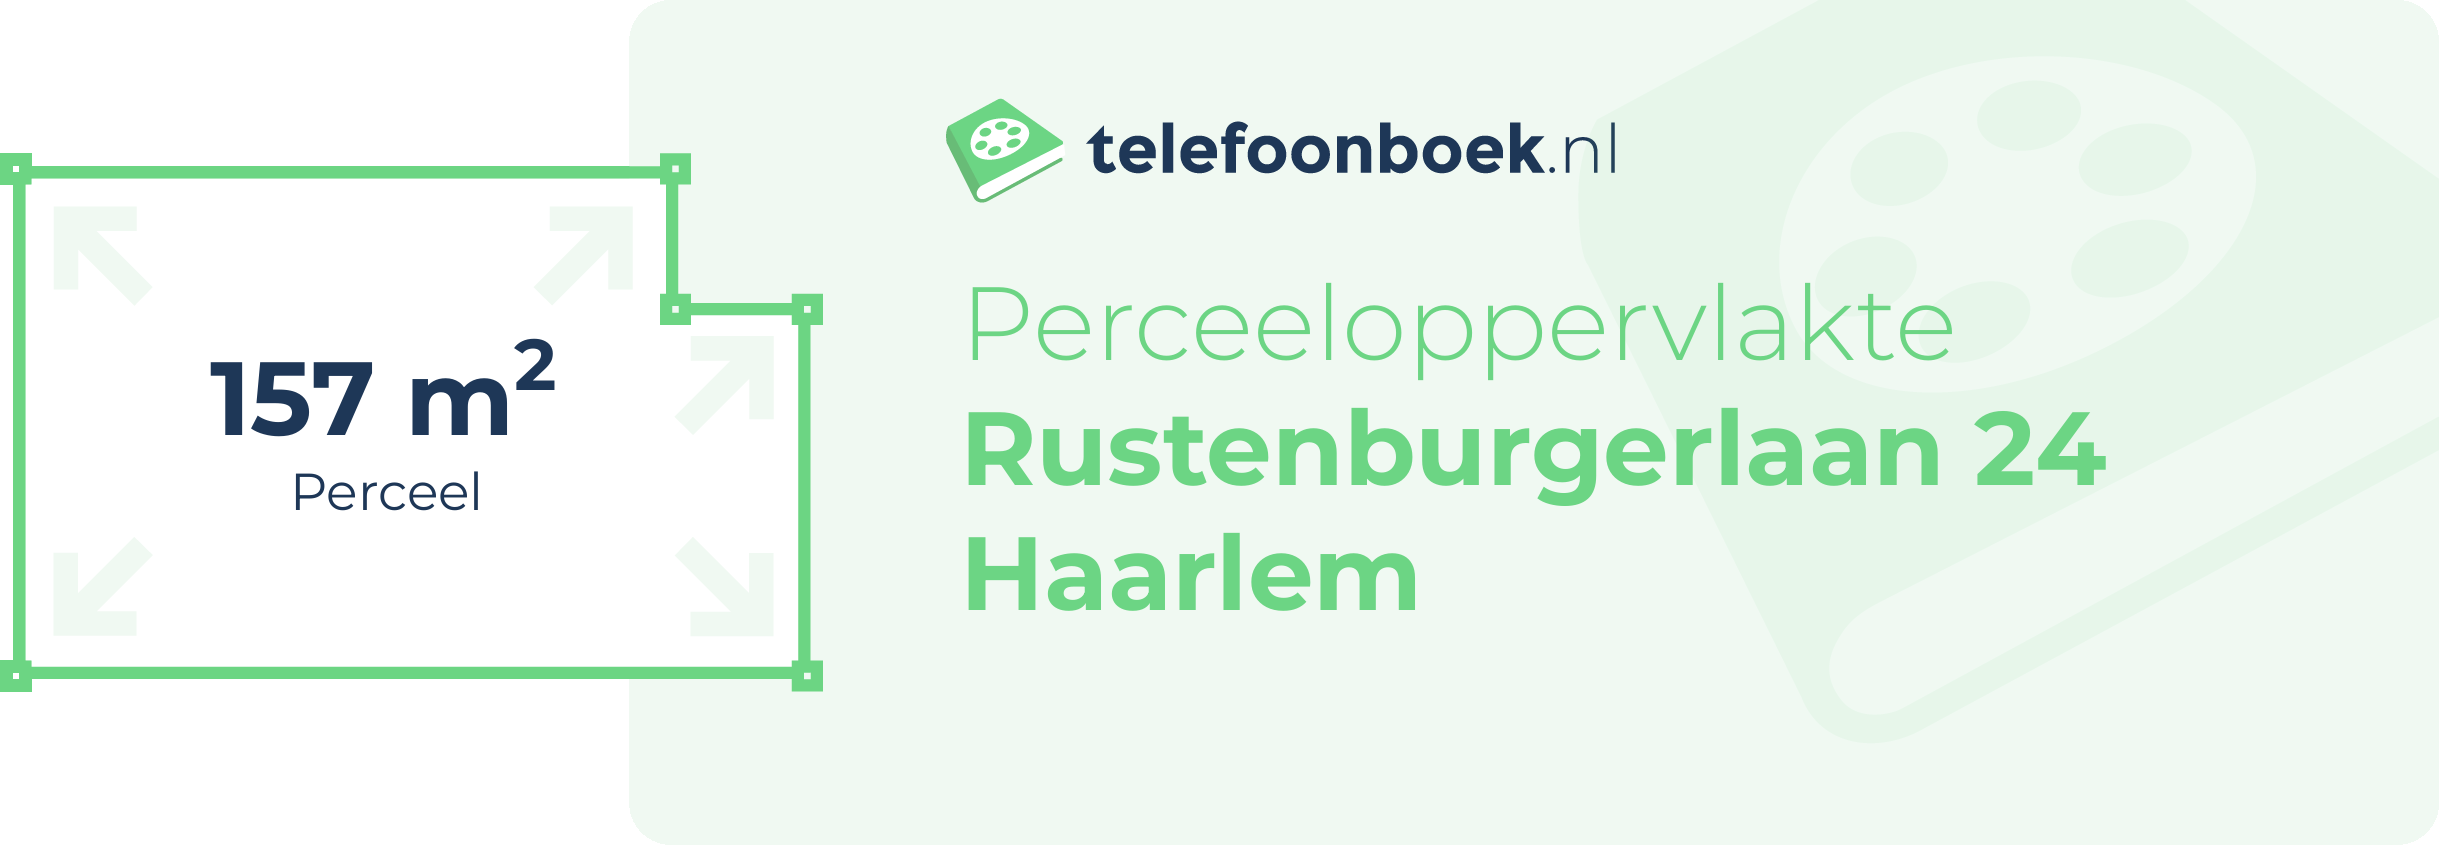 Perceeloppervlakte Rustenburgerlaan 24 Haarlem